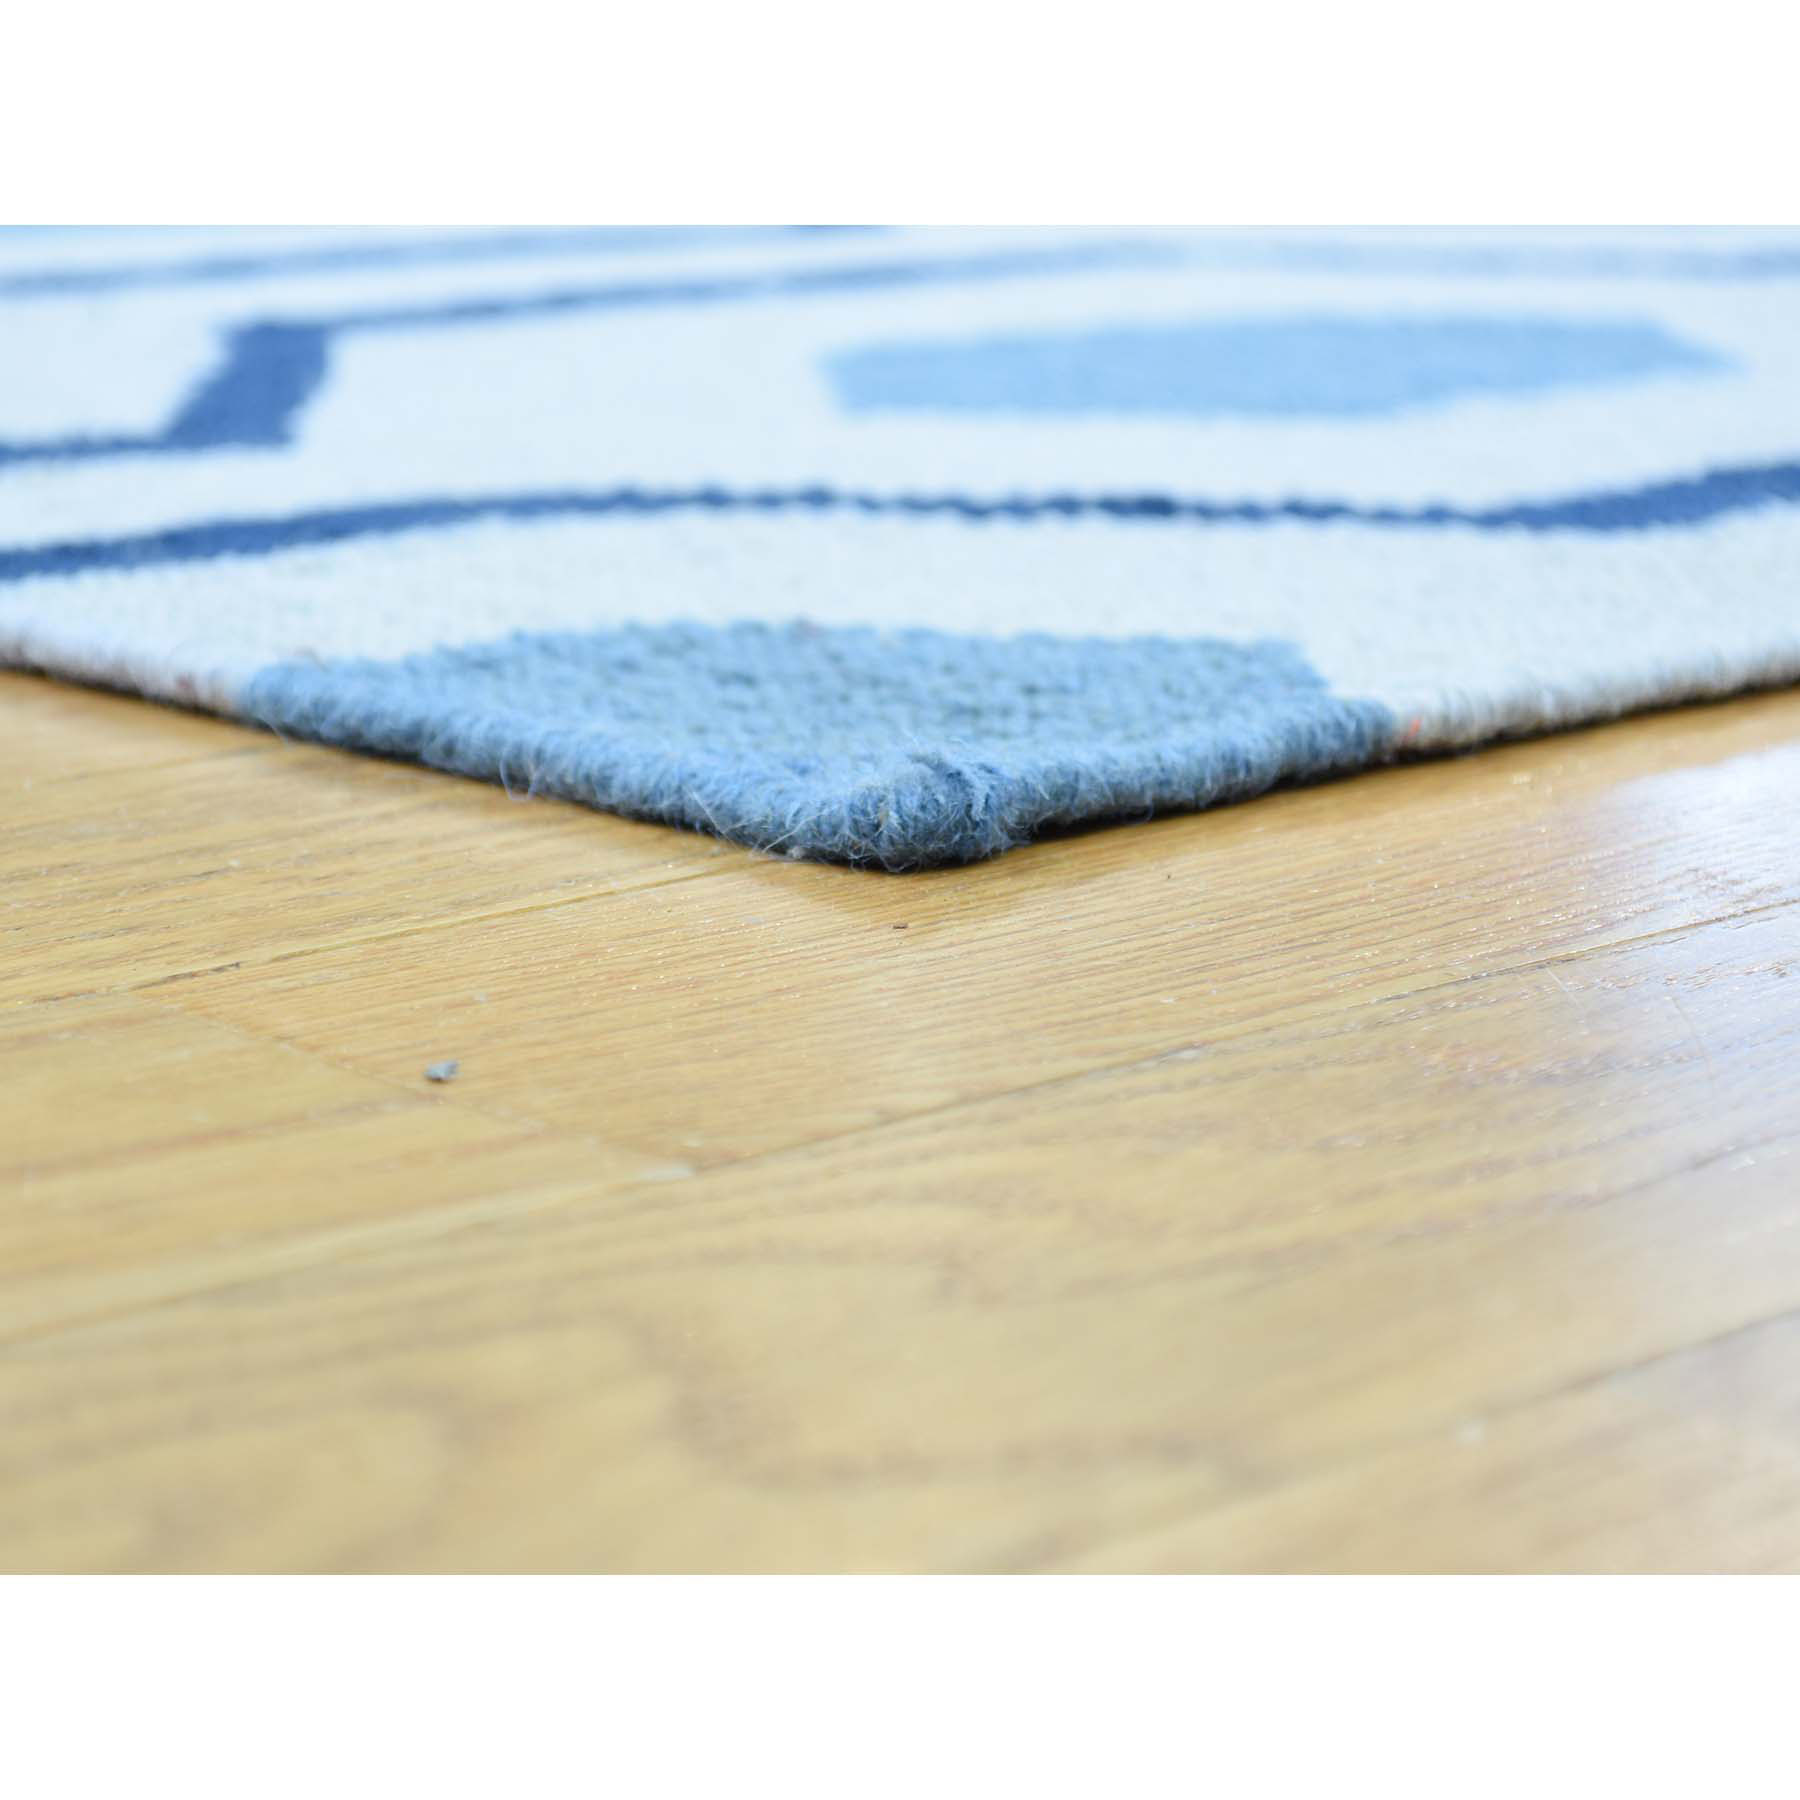 9-1 x12- Handmade Geometric Design Reversible Kilim Flat Weave Carpet 